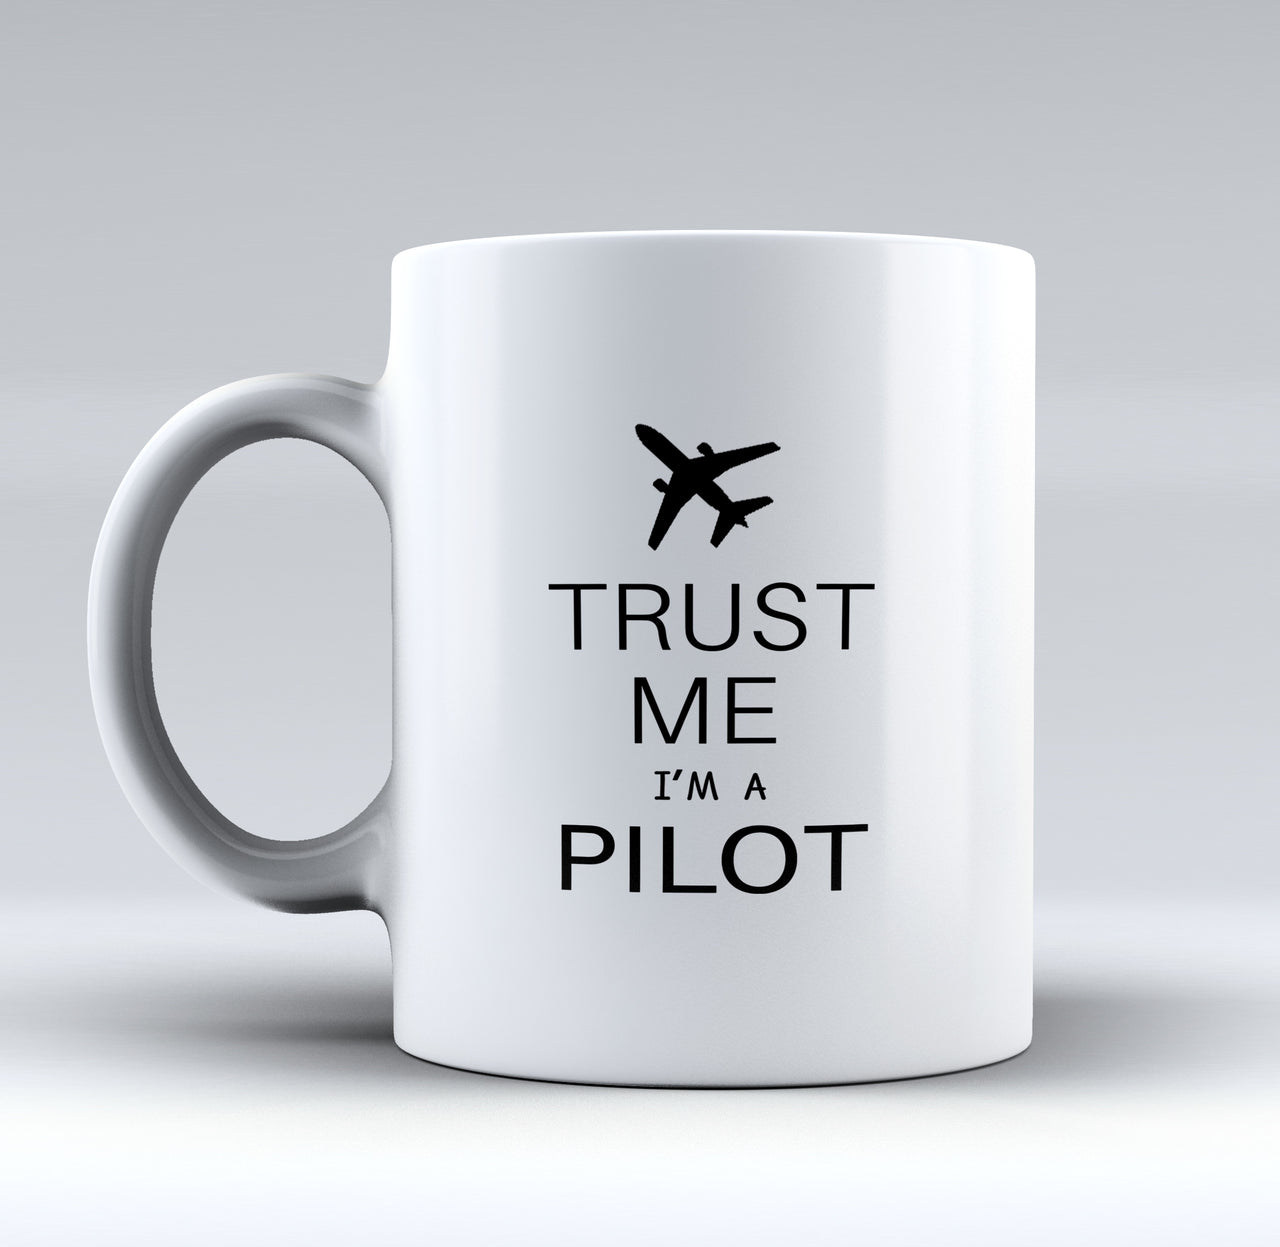 Trust Me I'm a Pilot 2 Designed Mugs